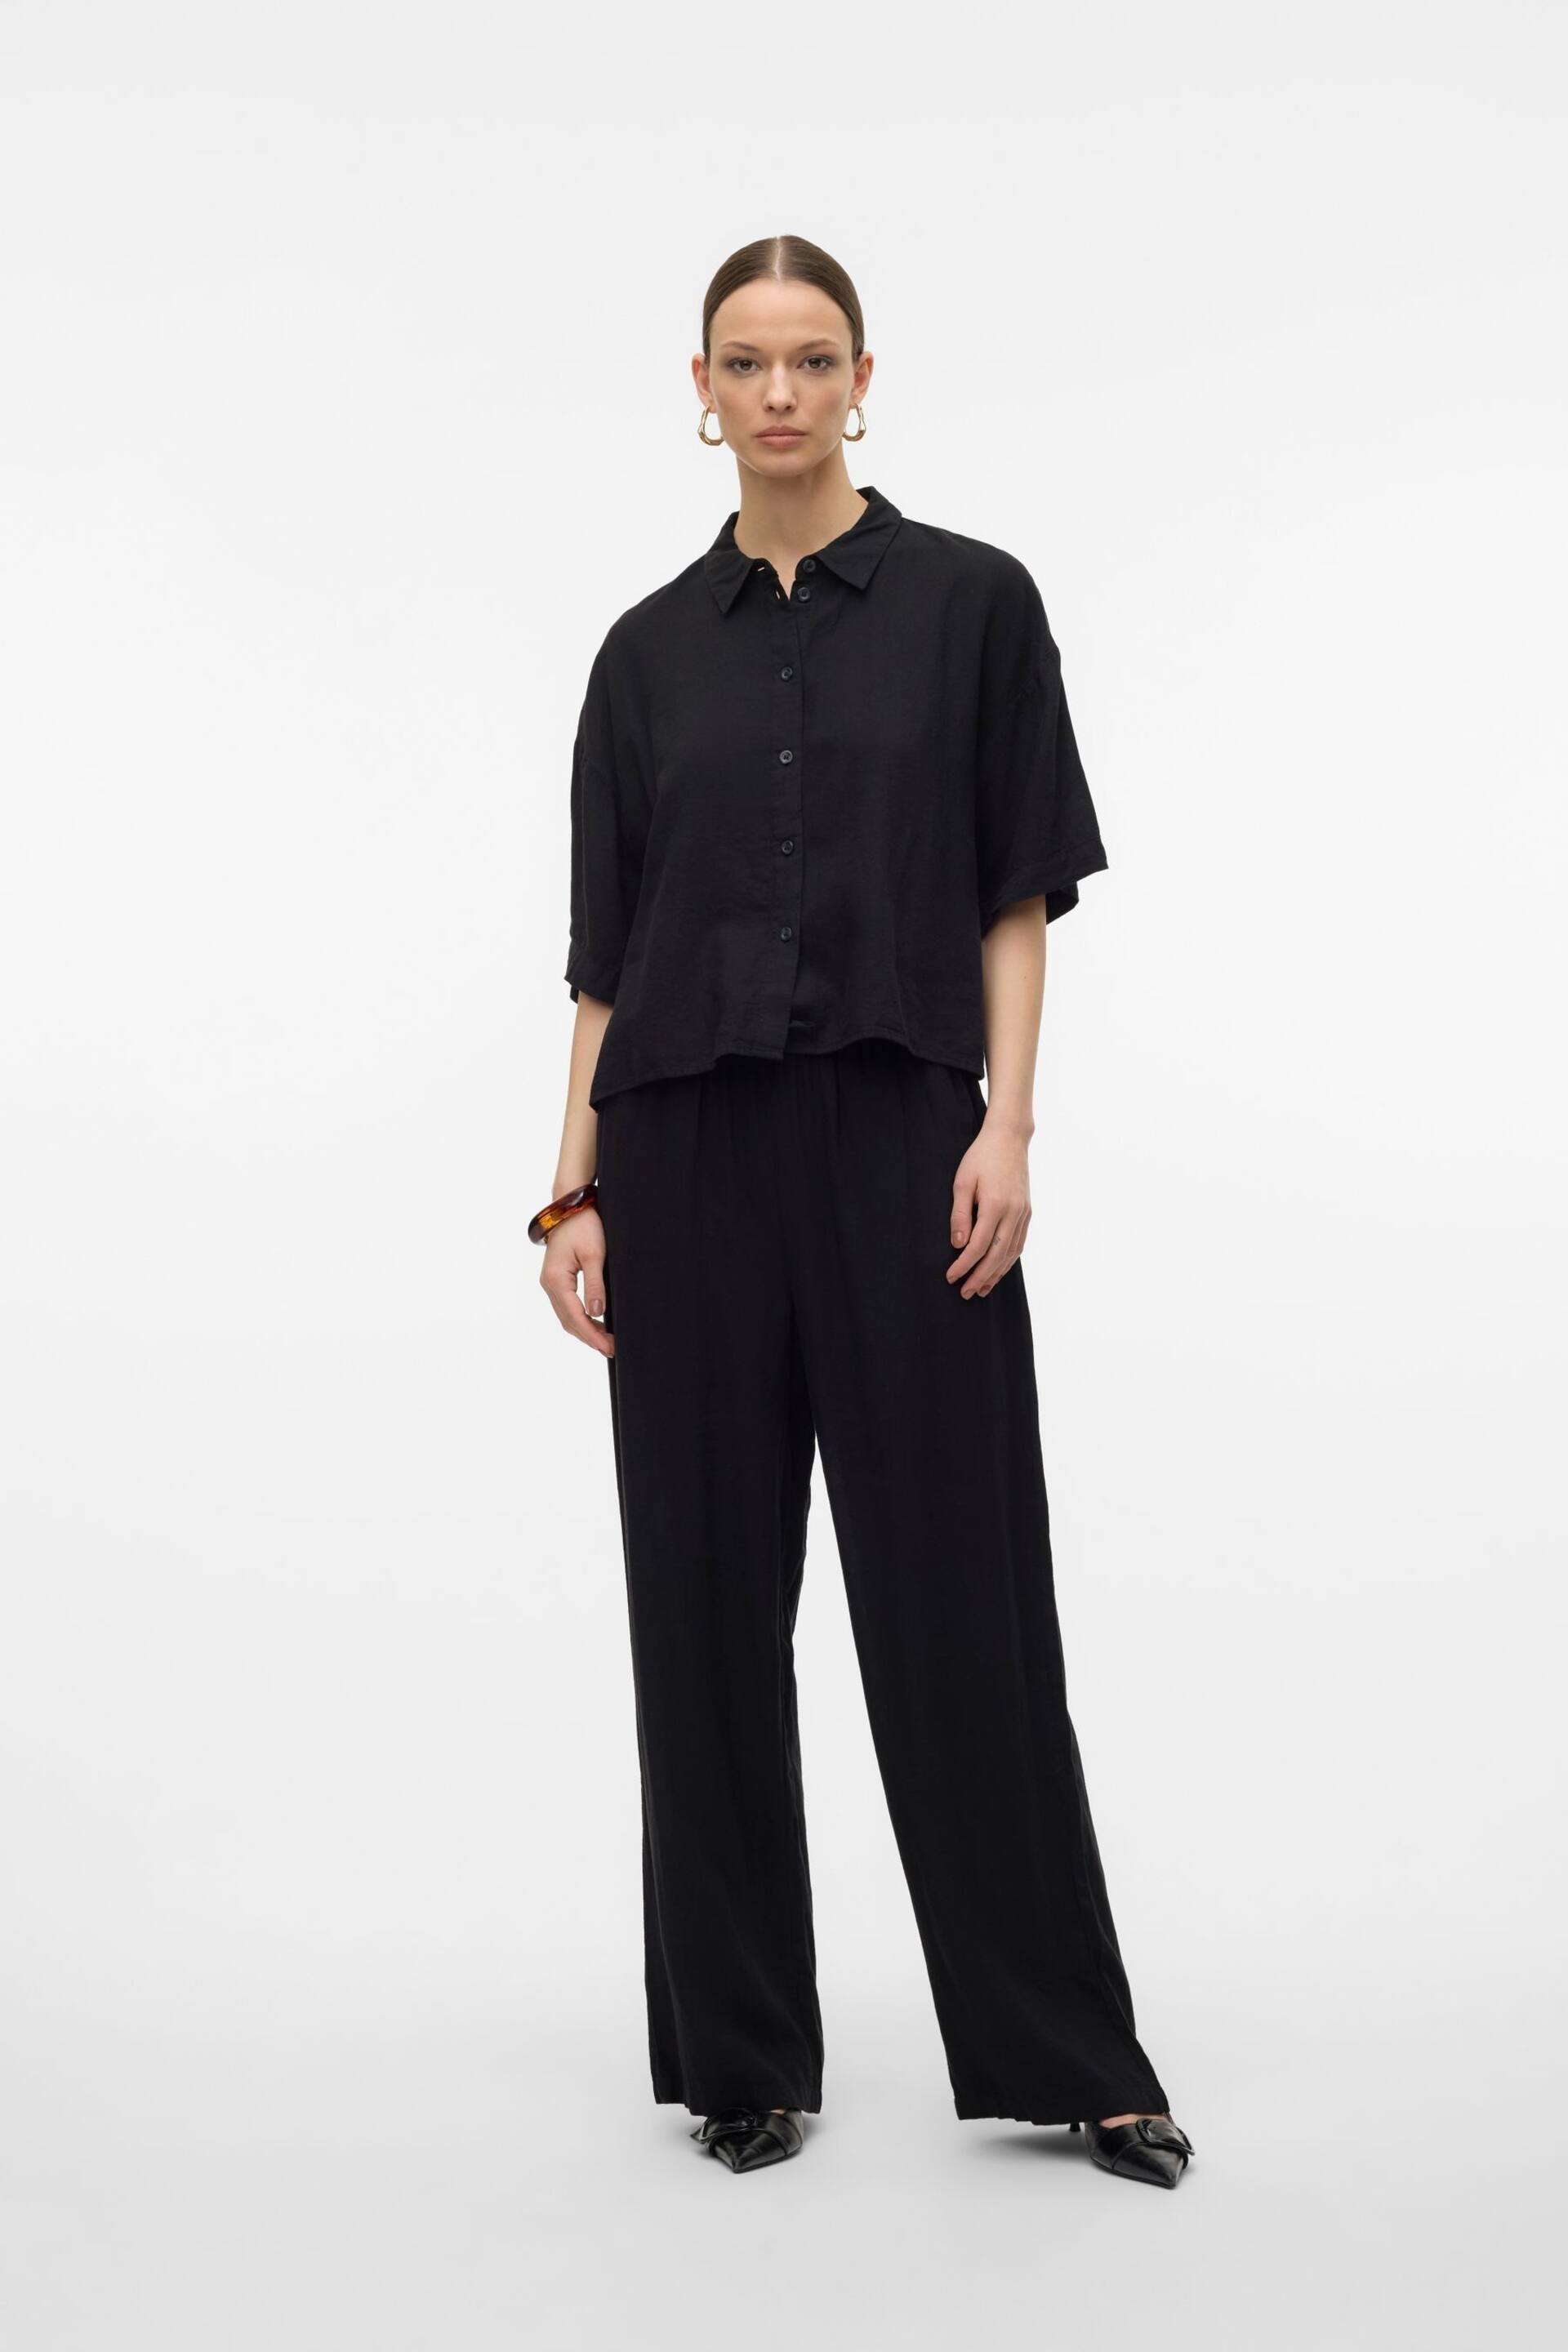 VERO MODA Black Linen Blend Short Sleeve Relaxed Shirt - Image 4 of 6